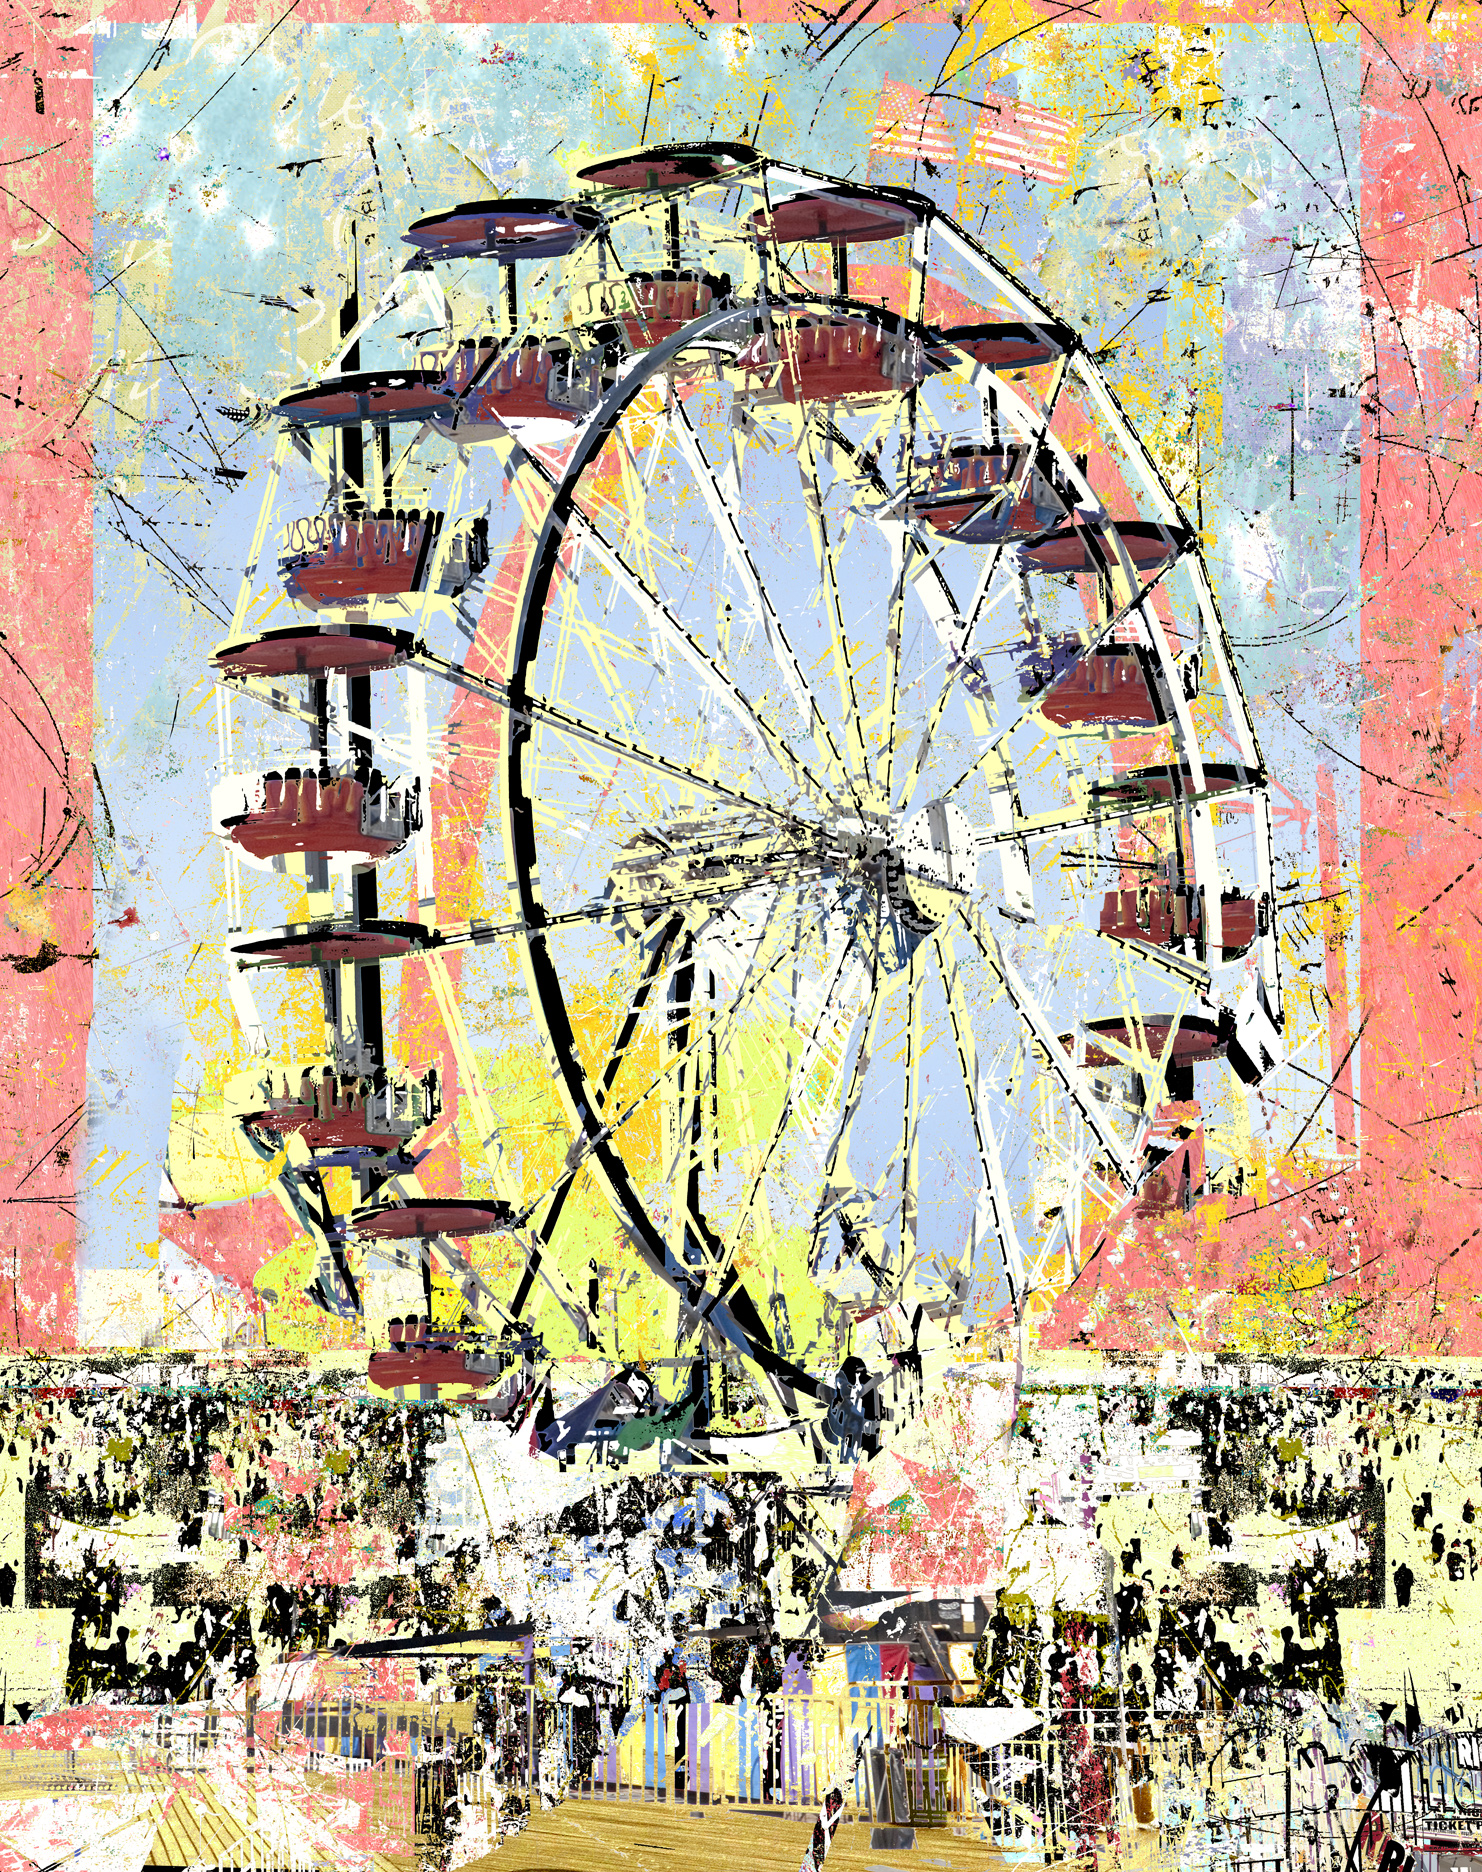 Ferris Wheel begins New Season of Making Art